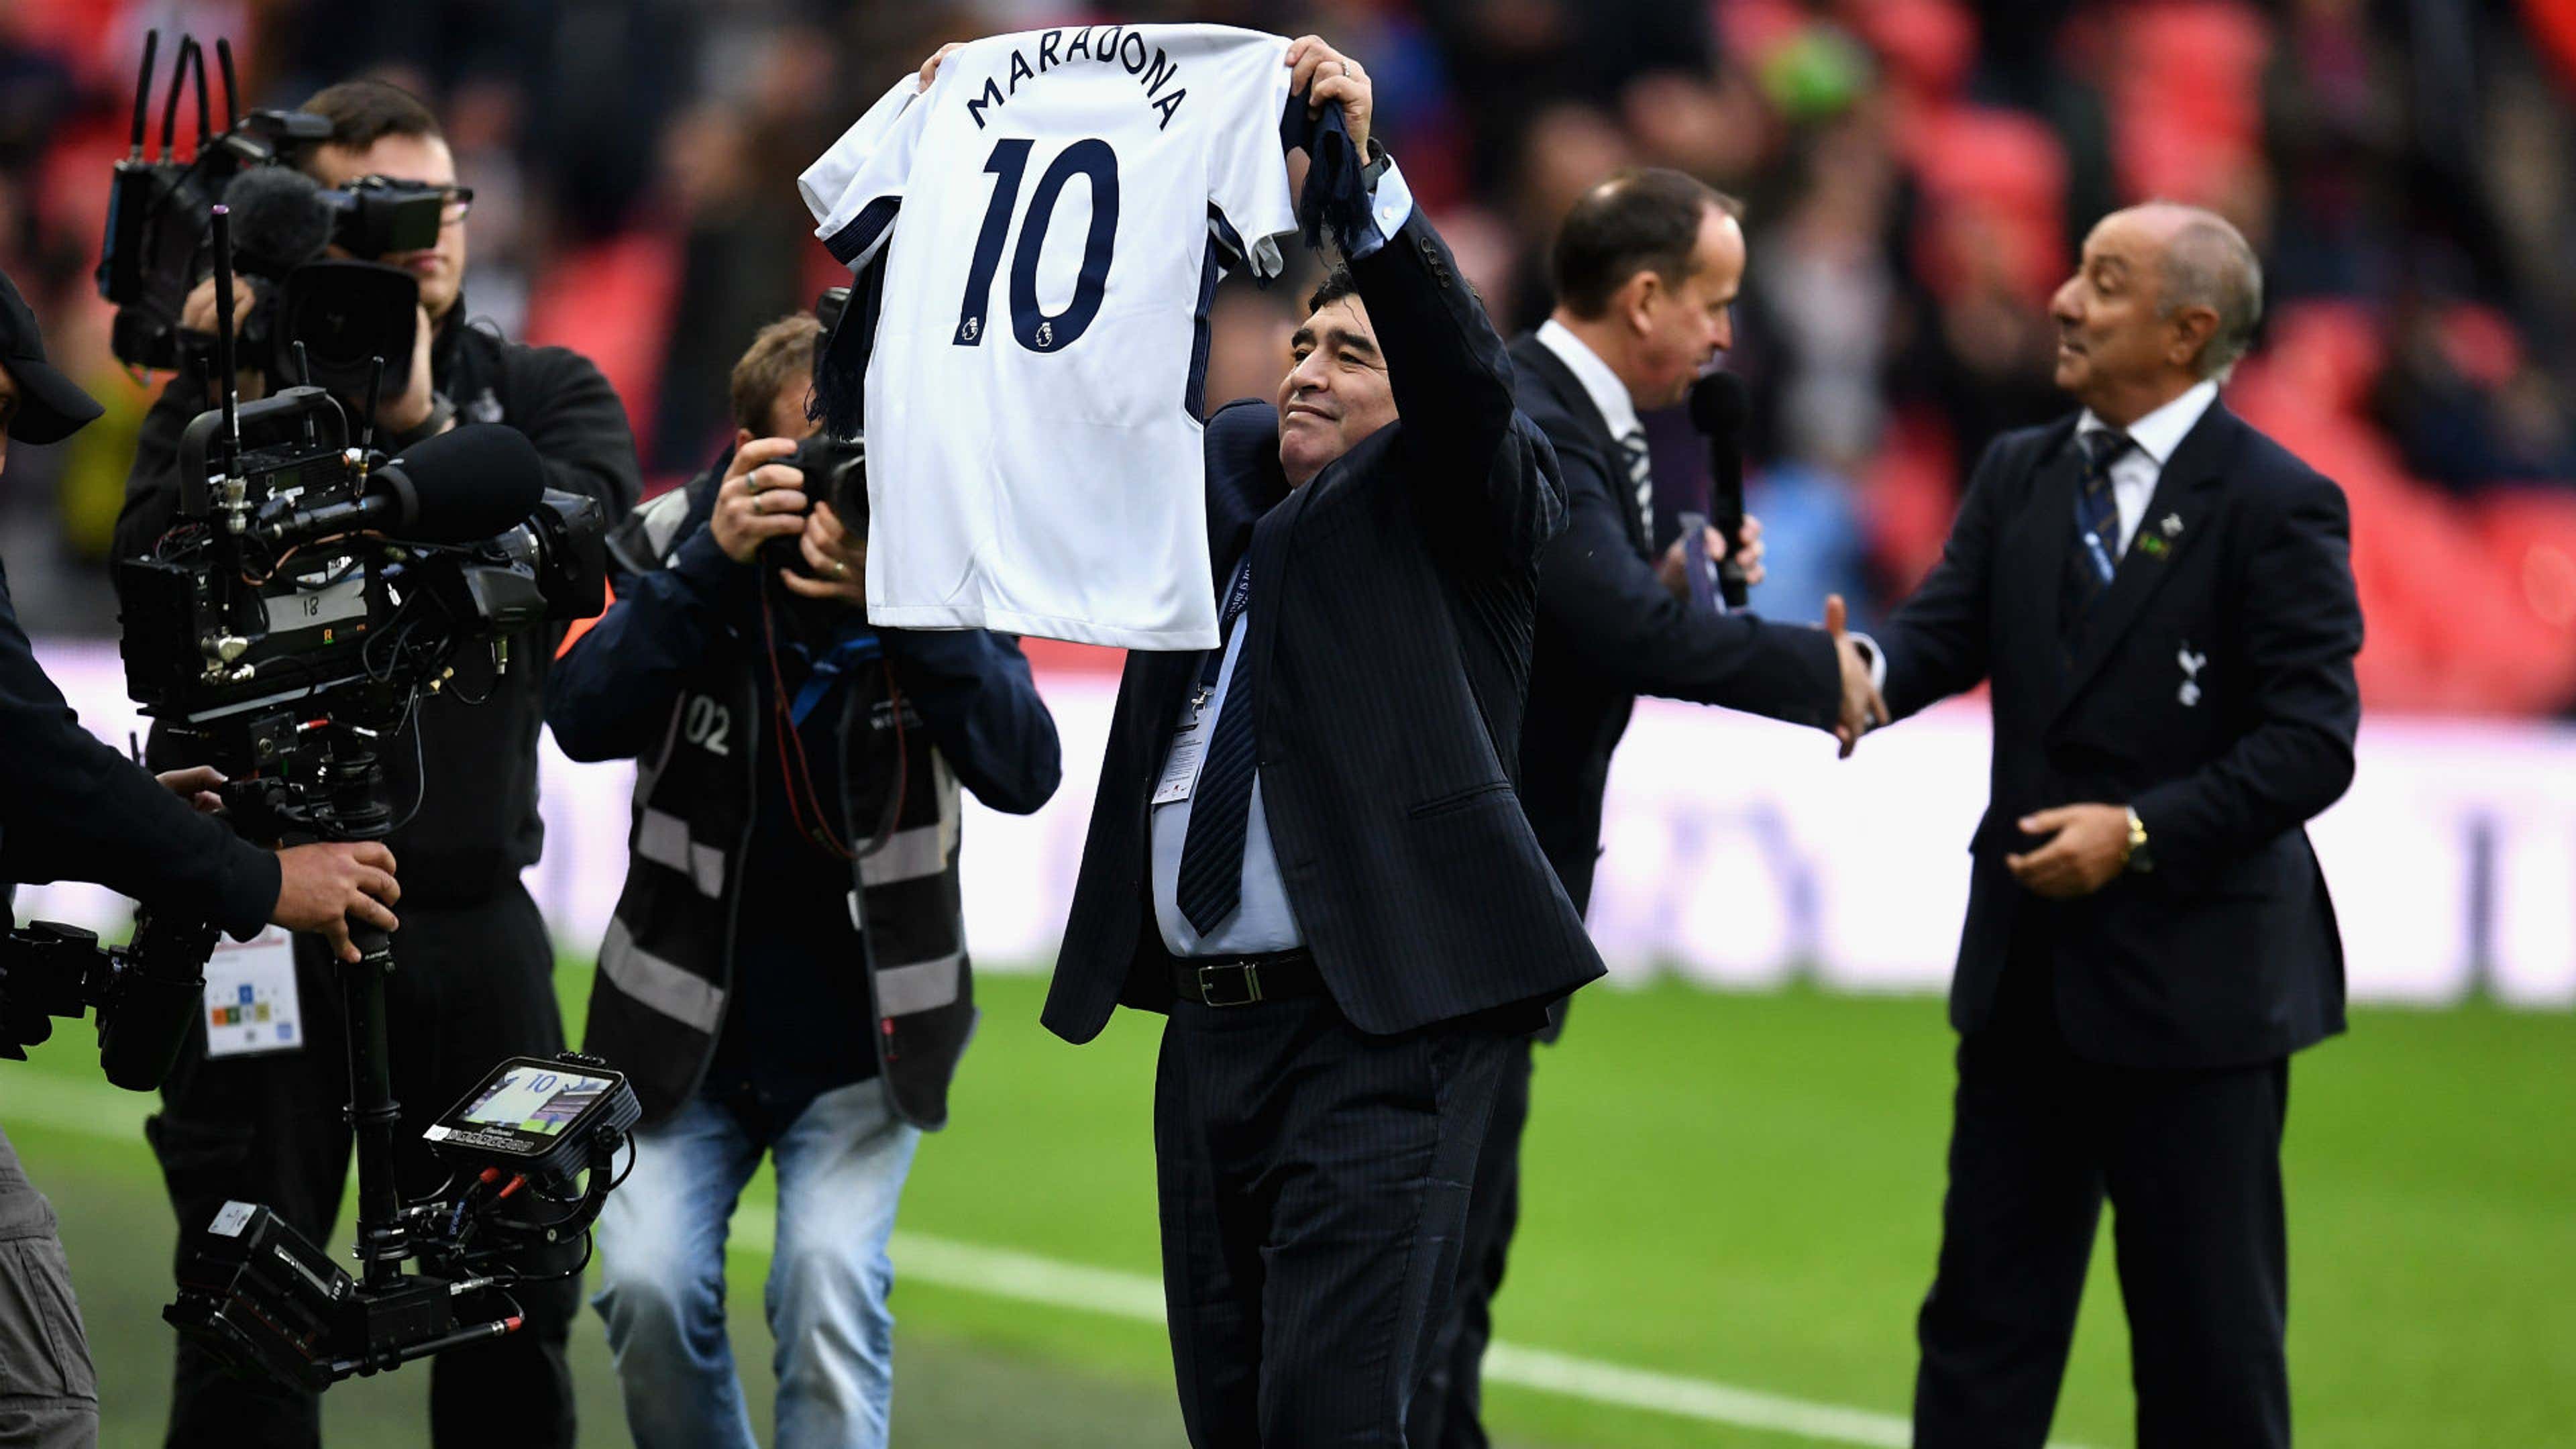 Tottenham Hotspur on X: Maradona wore the #Tottenham shirt Kane